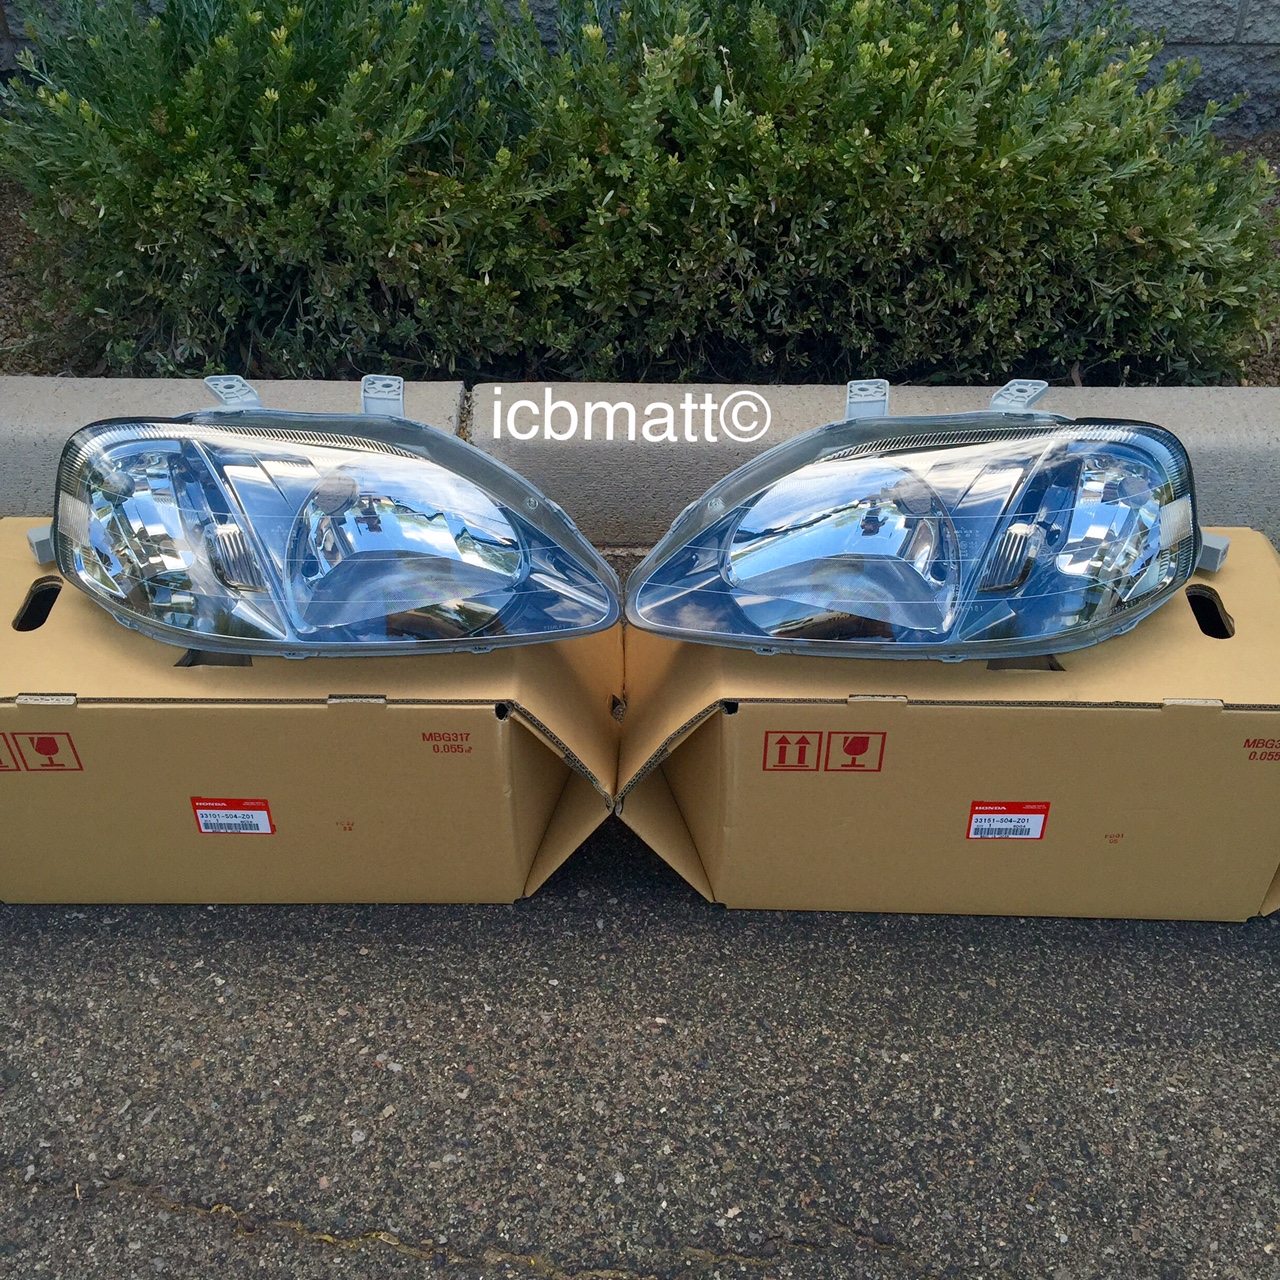 For 99-00 Honda Civic Lx Ex Si Ek Jdm Headlights Black Crystal Housing Lamps